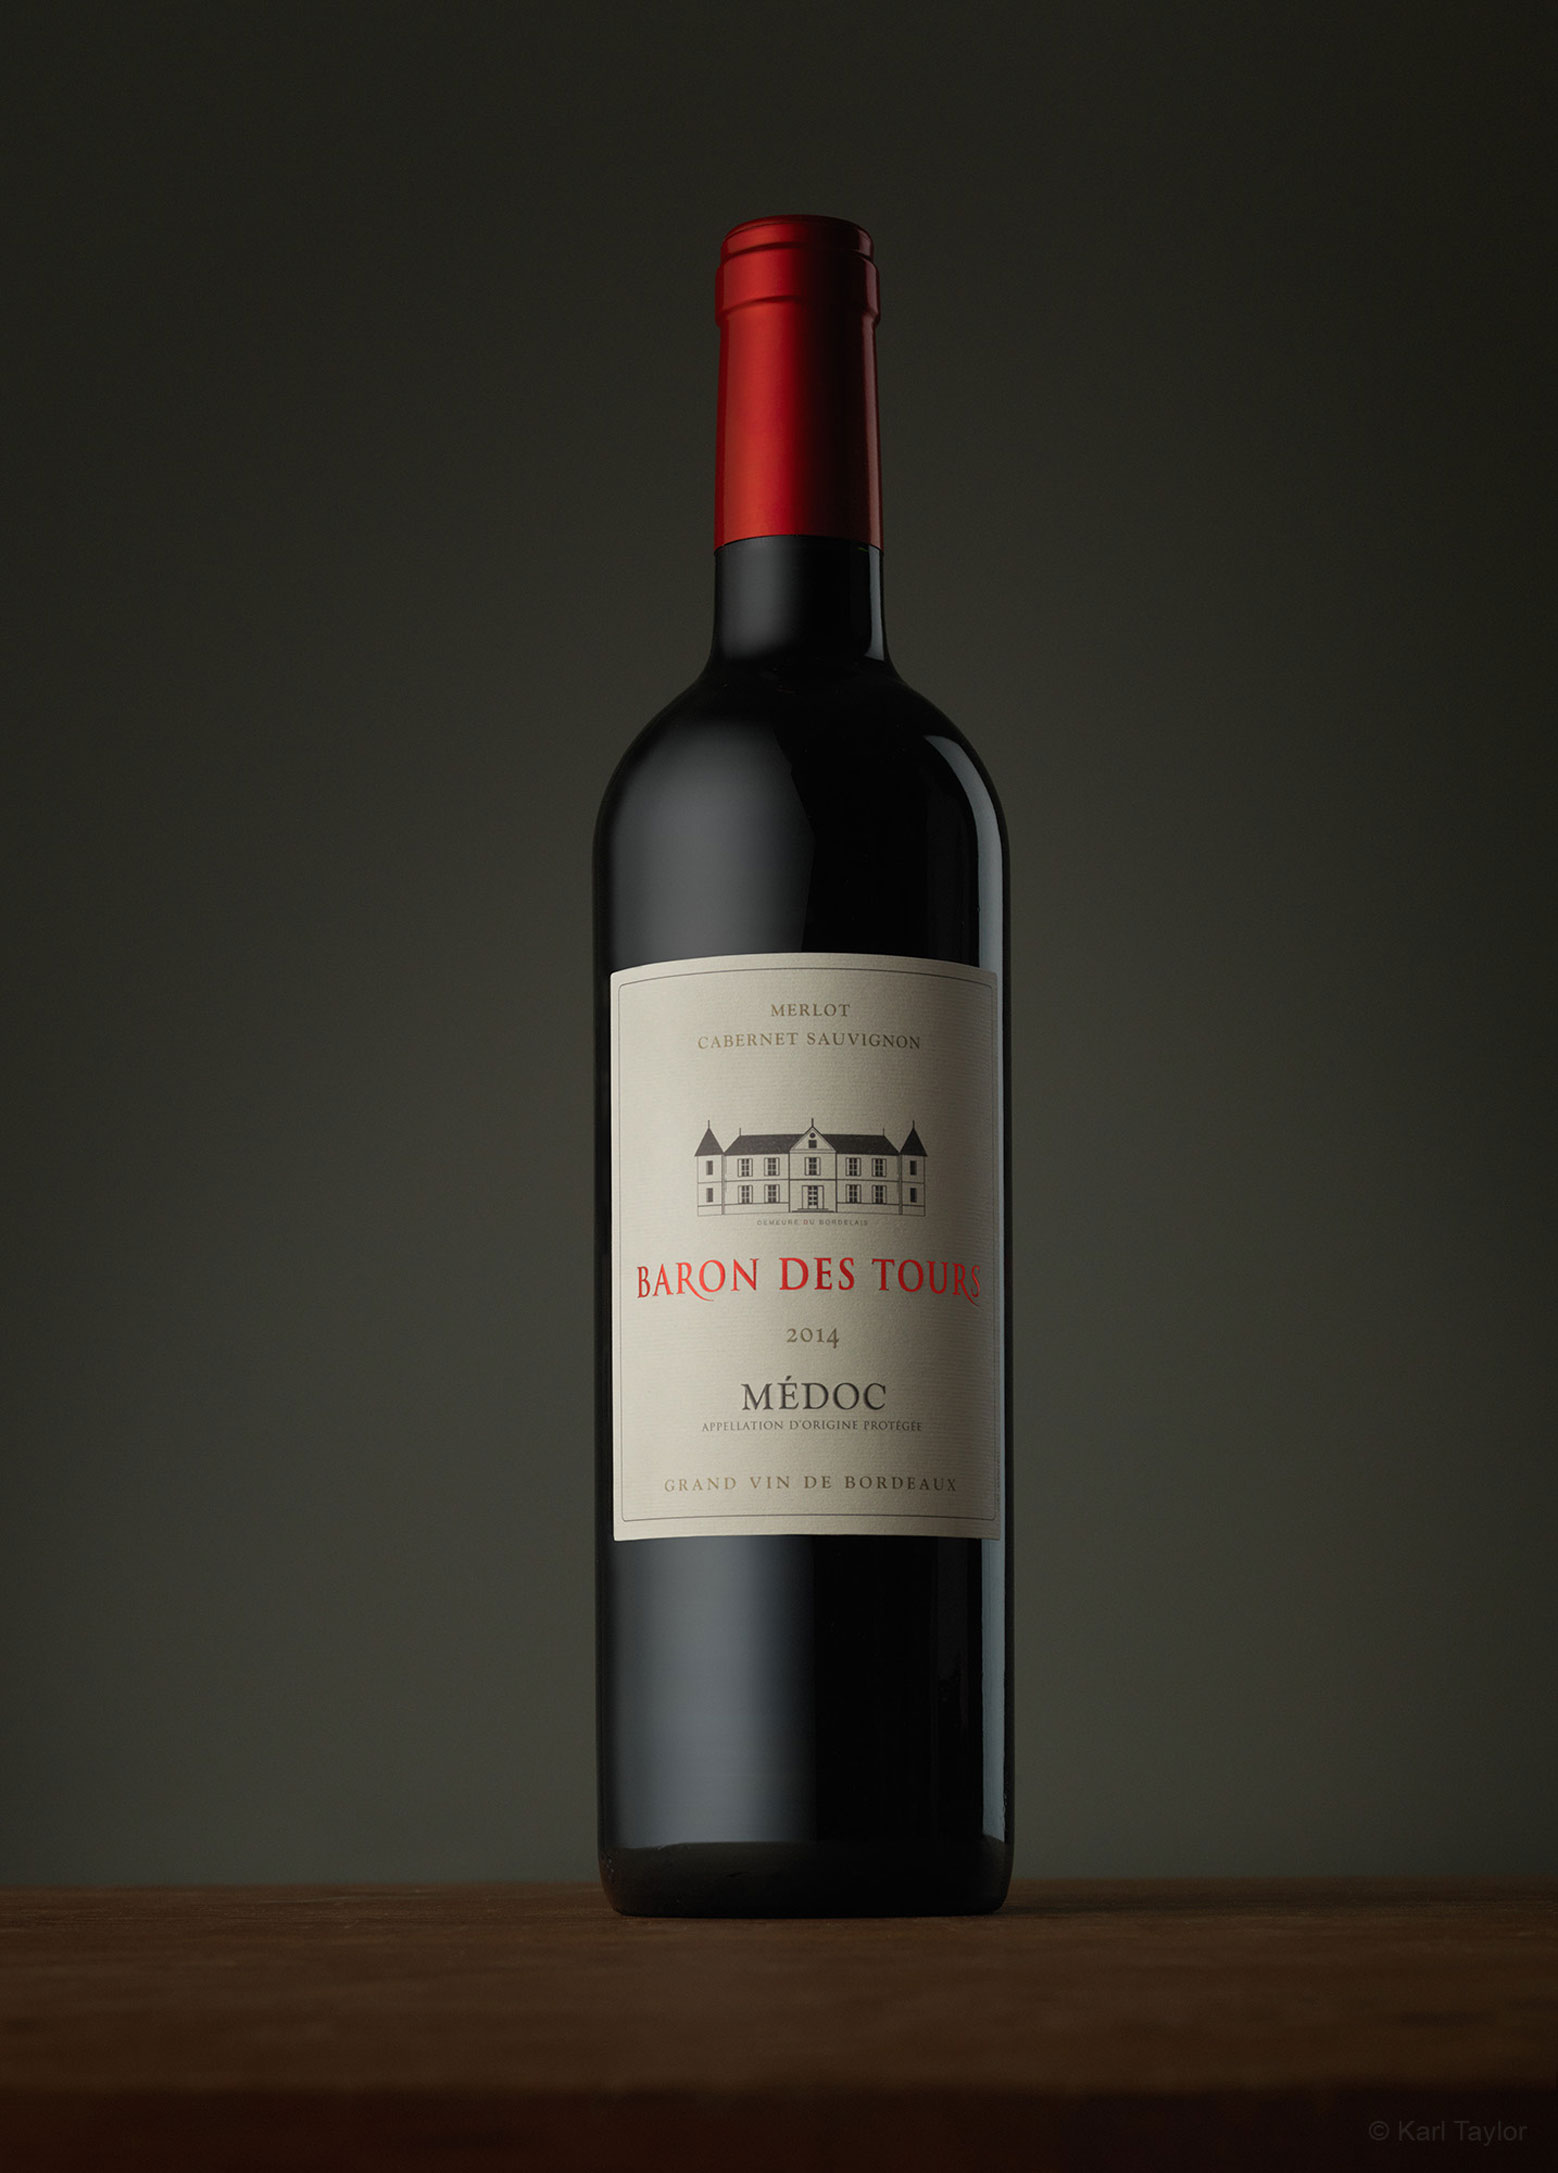 Wine bottle image by Karl Taylor